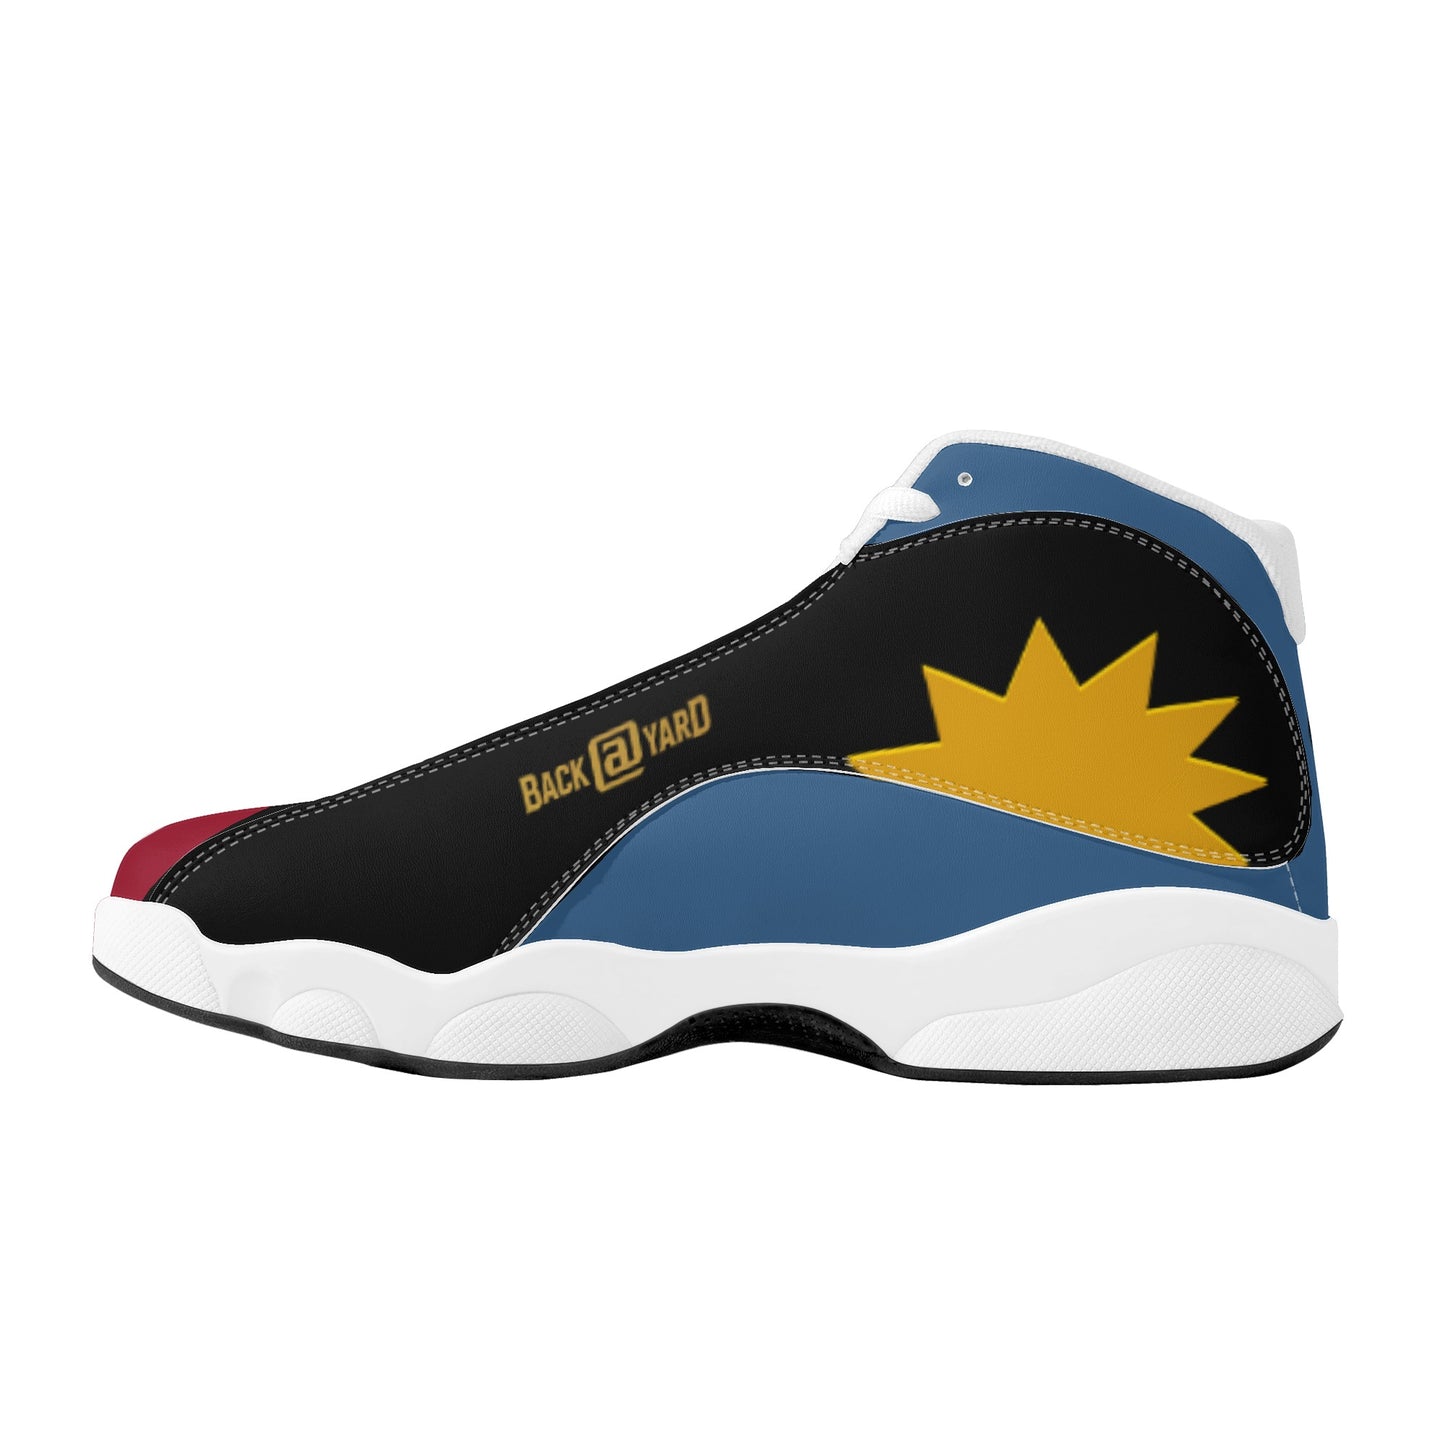 Women's White Soles Basketball Shoes - Antigua & Barbuda